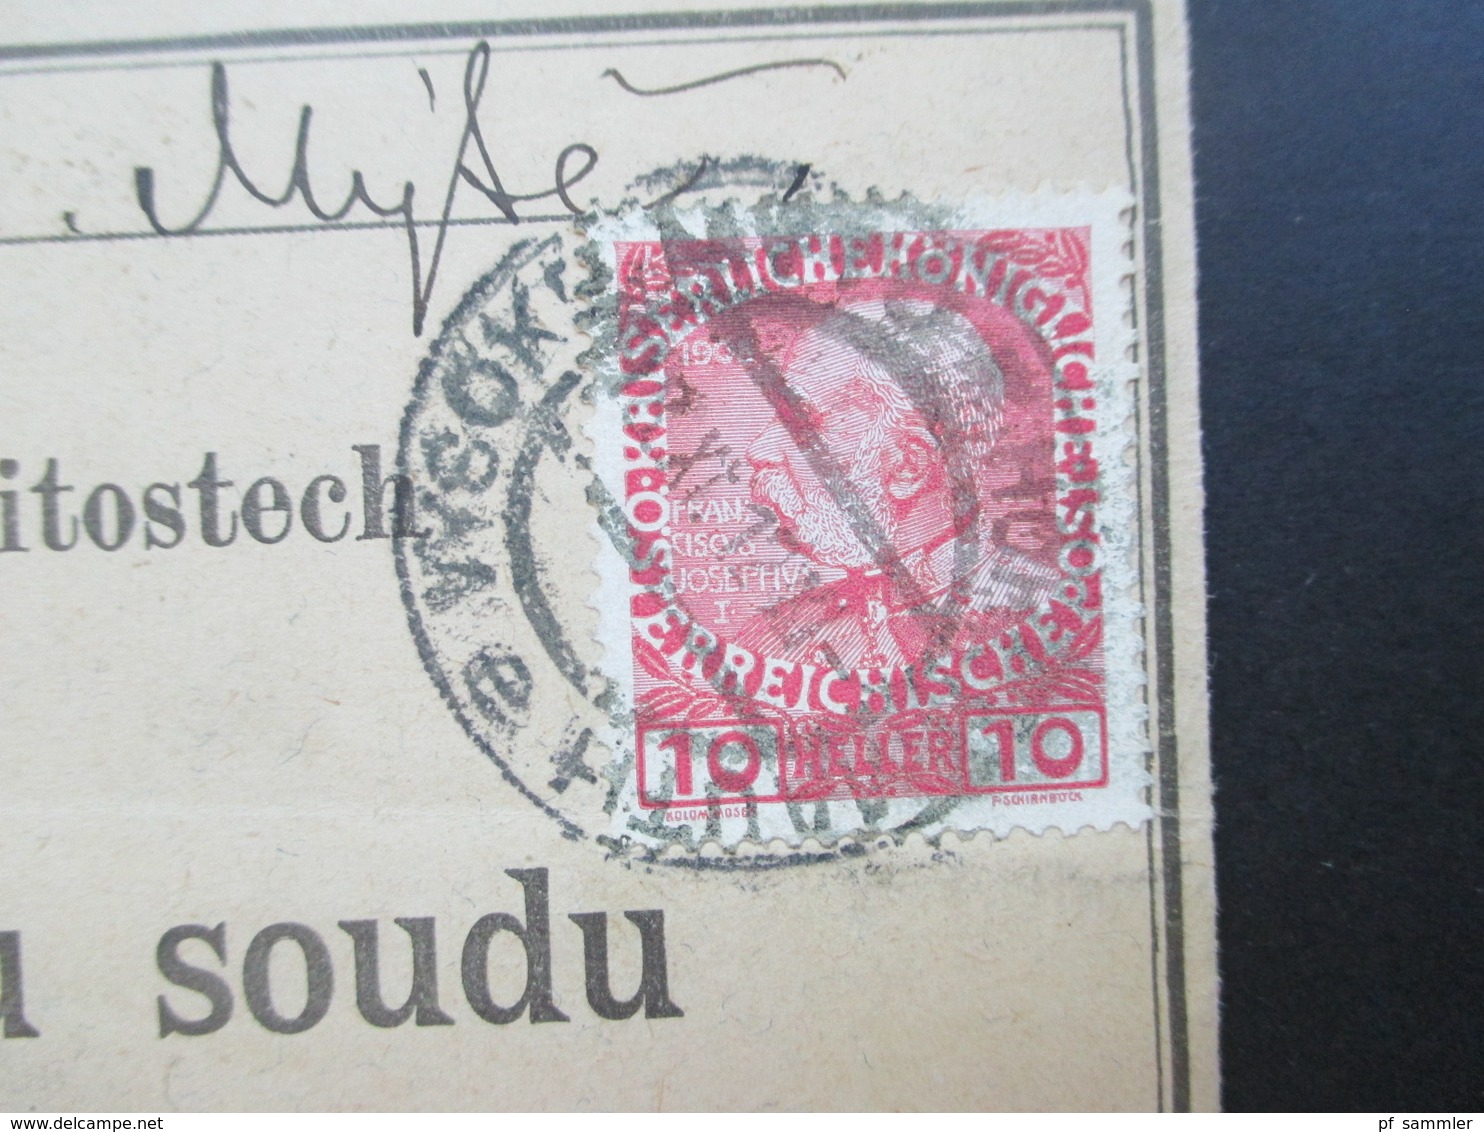 Österreich 1912 Nr. 144 EF Faltbrief Mit Inhalt V Porucenskych Zalezitostech C.K. Okresnimu Soudu - Briefe U. Dokumente